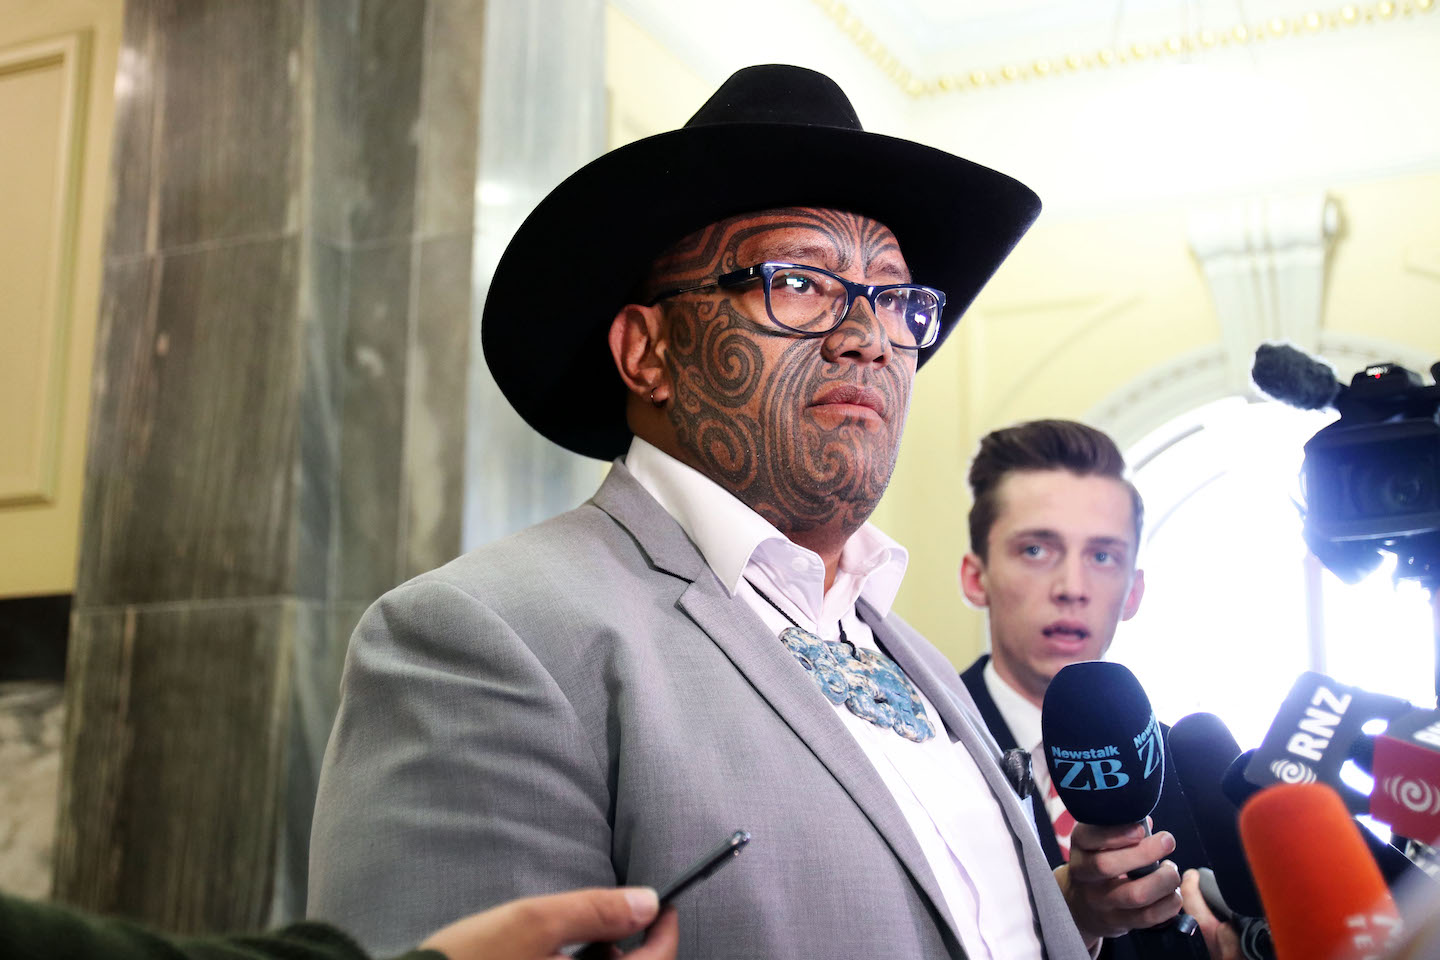 Māori Politicians Need to Change New Zealand’s Name to Aotearoa